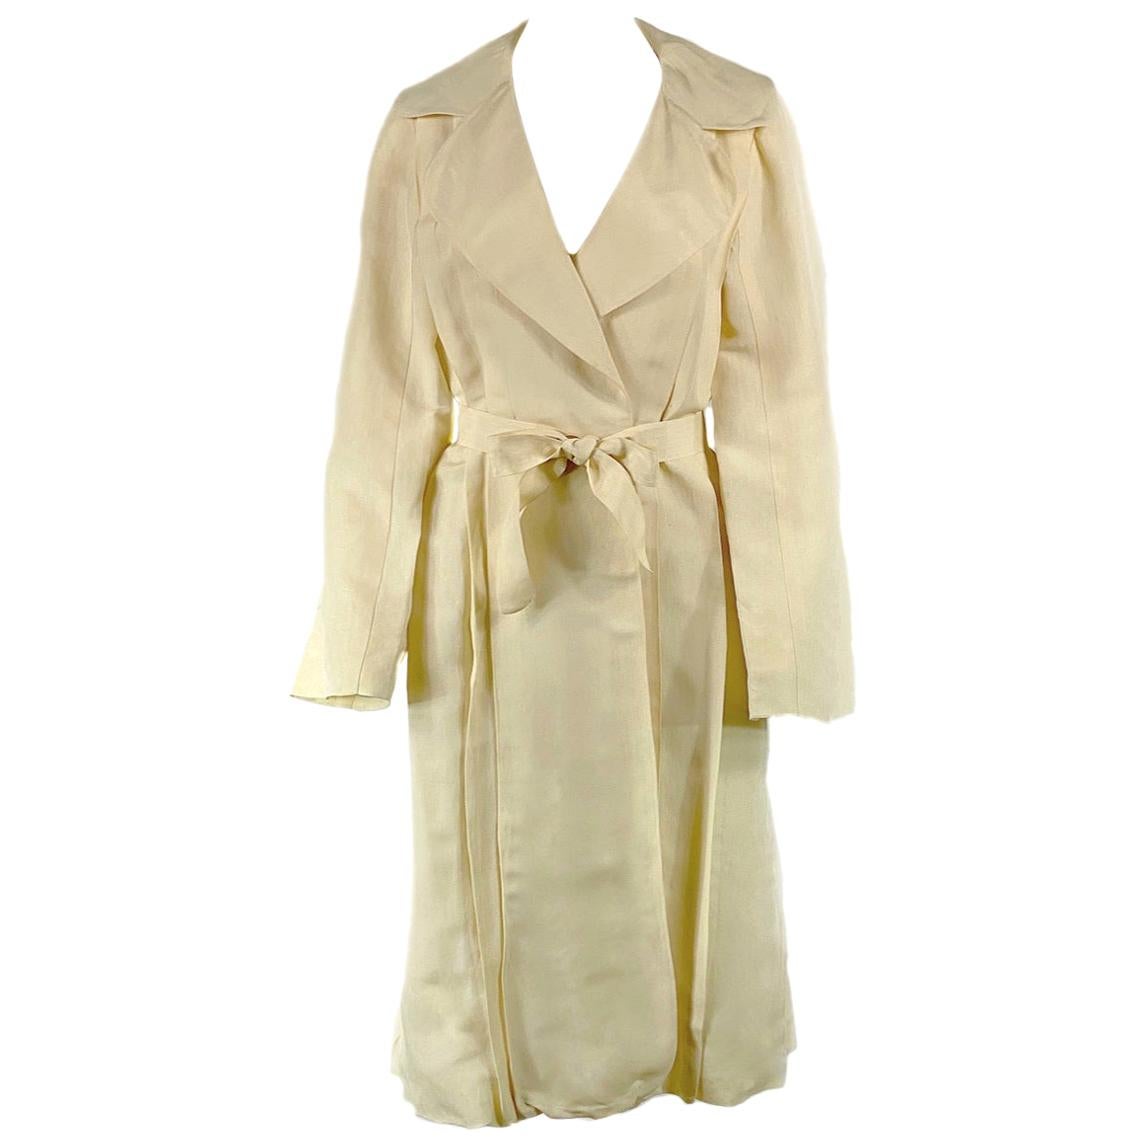 2006 LANVIN Cream/ Ivory Linen Coat Size 40